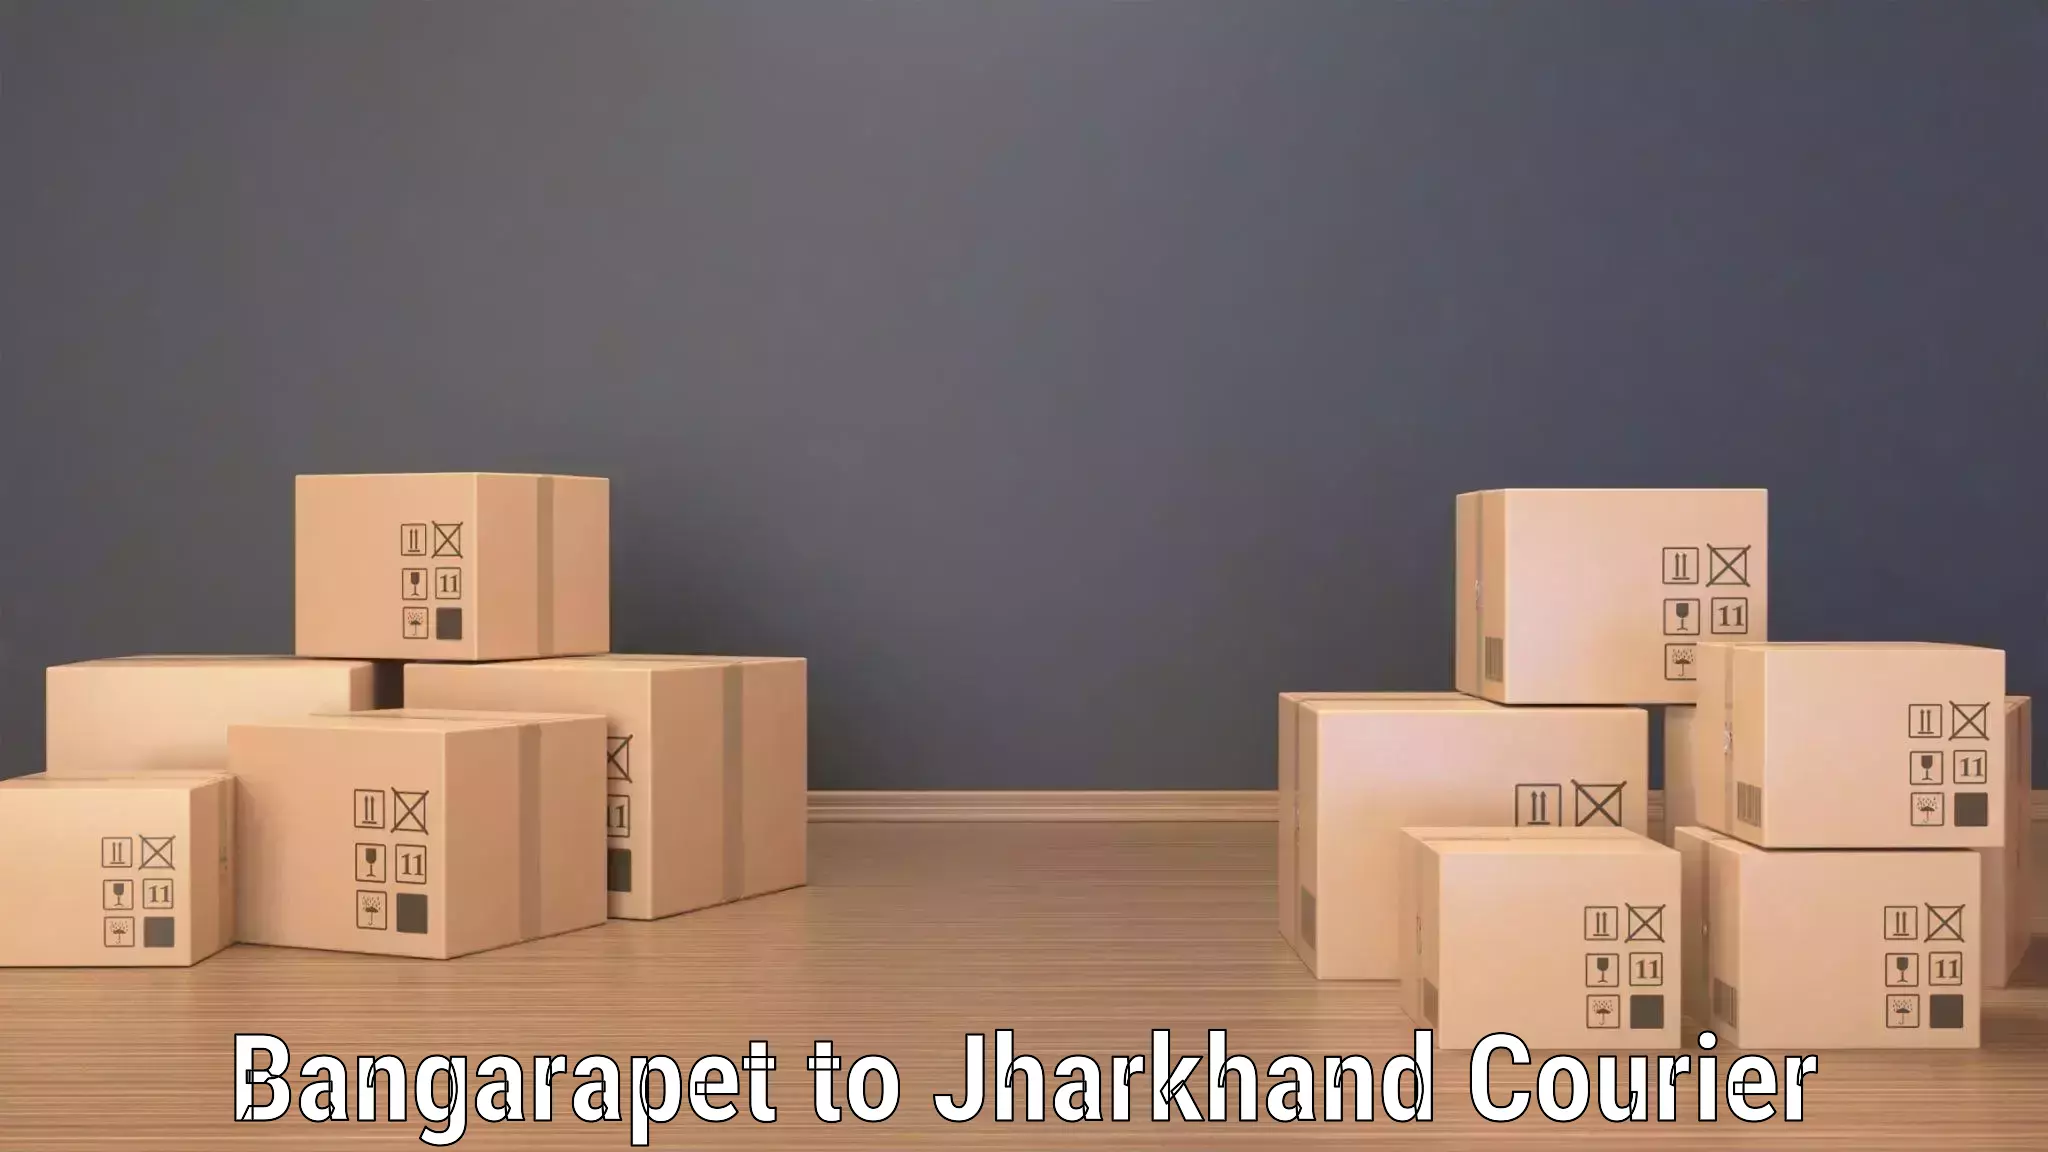 Package delivery network Bangarapet to Chakradharpur